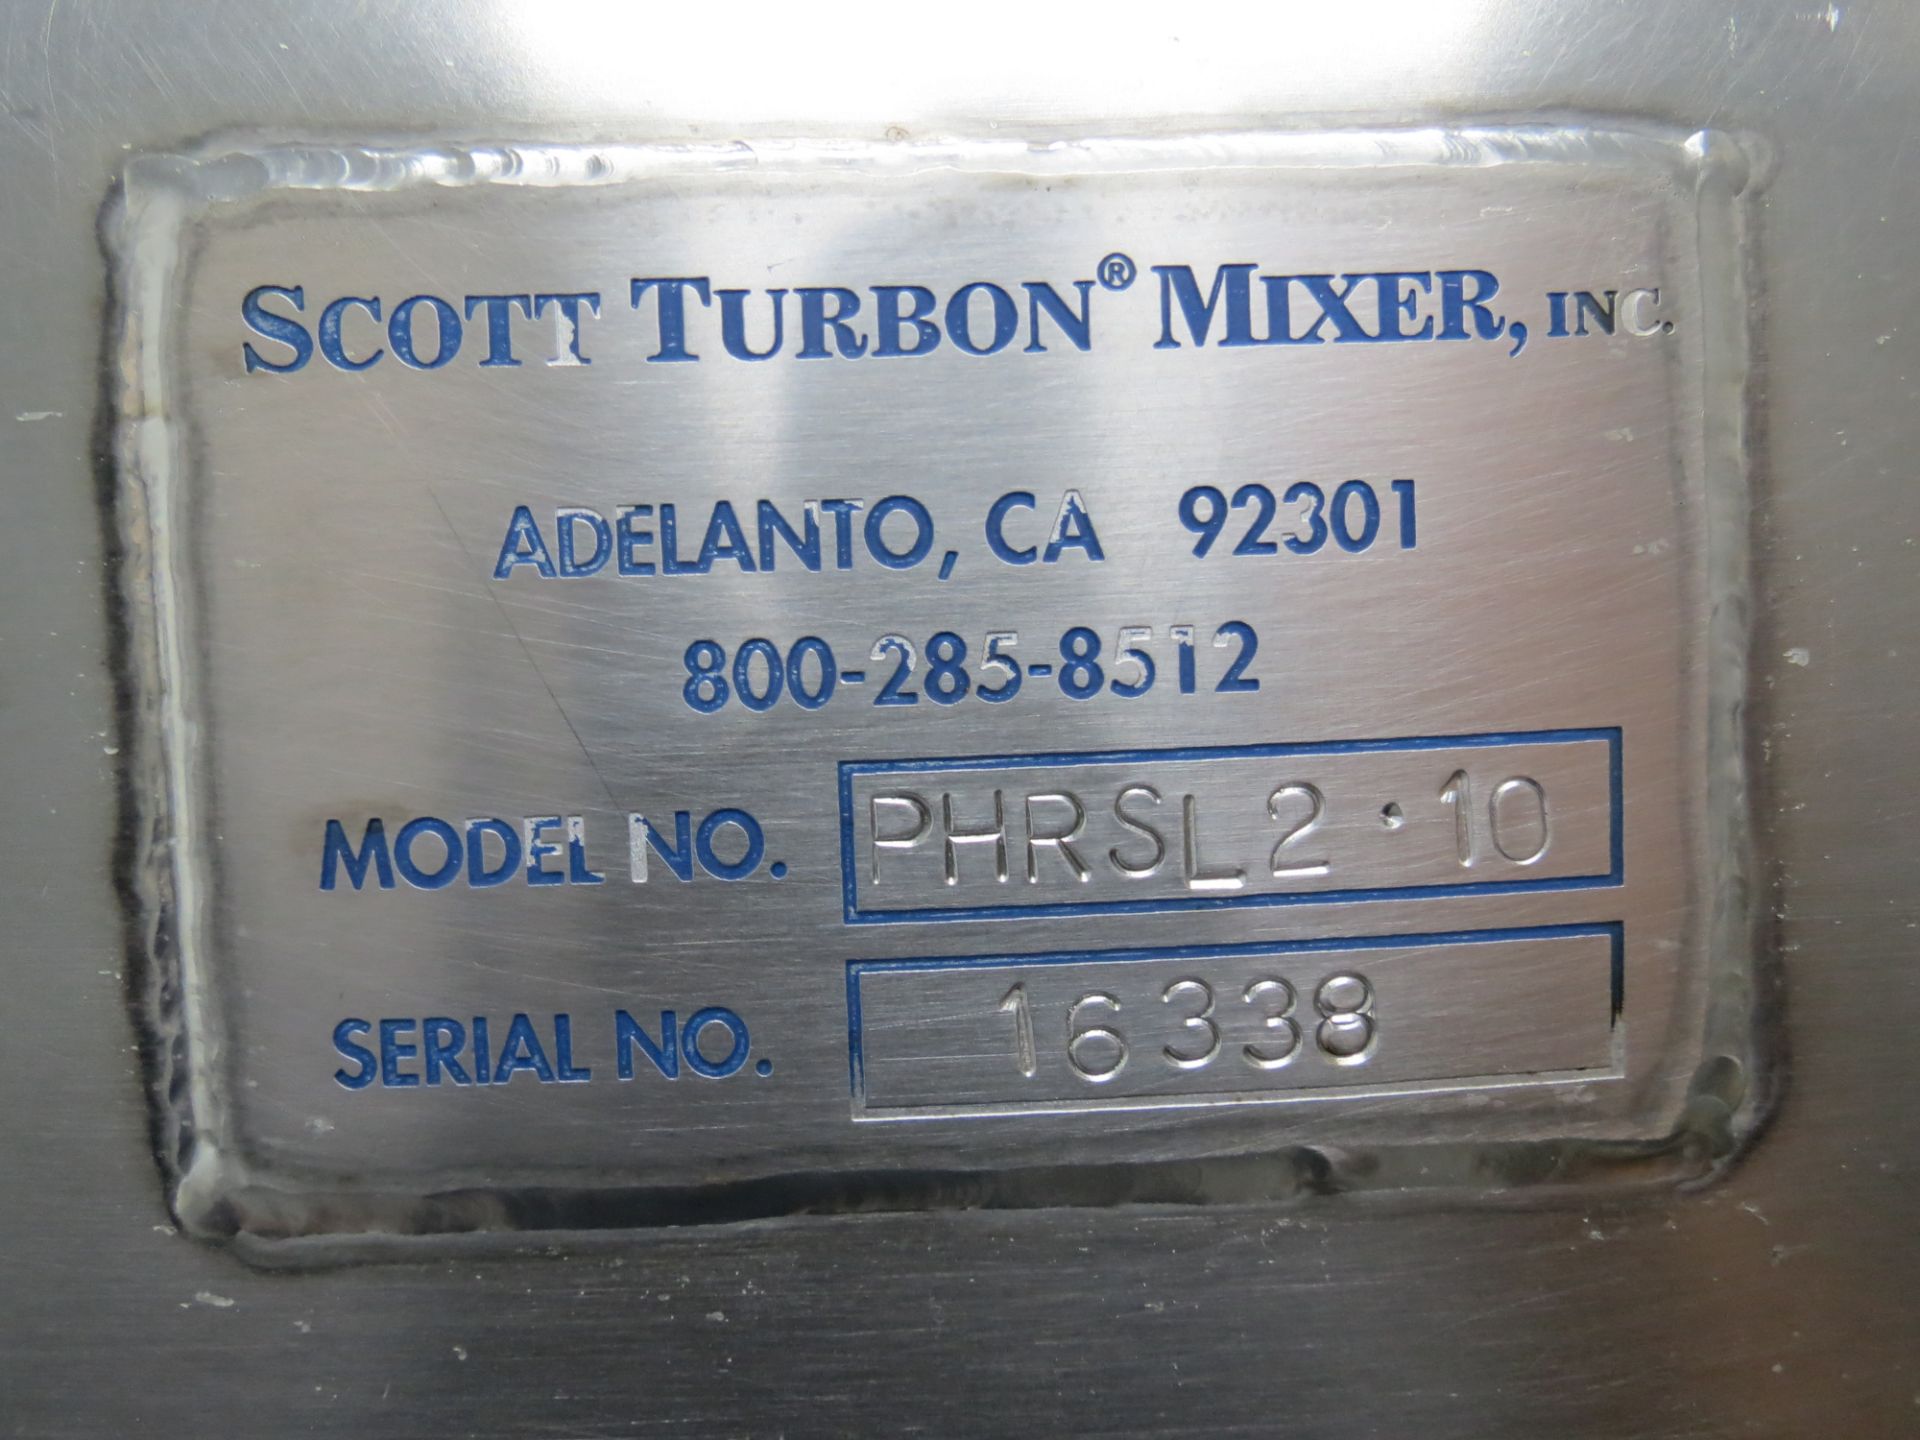 Scott Turbon Mixer Model PHRSL2.10 High Shear Mixer with 100 Gallon Stainless Steel Tank SN: - Image 3 of 3